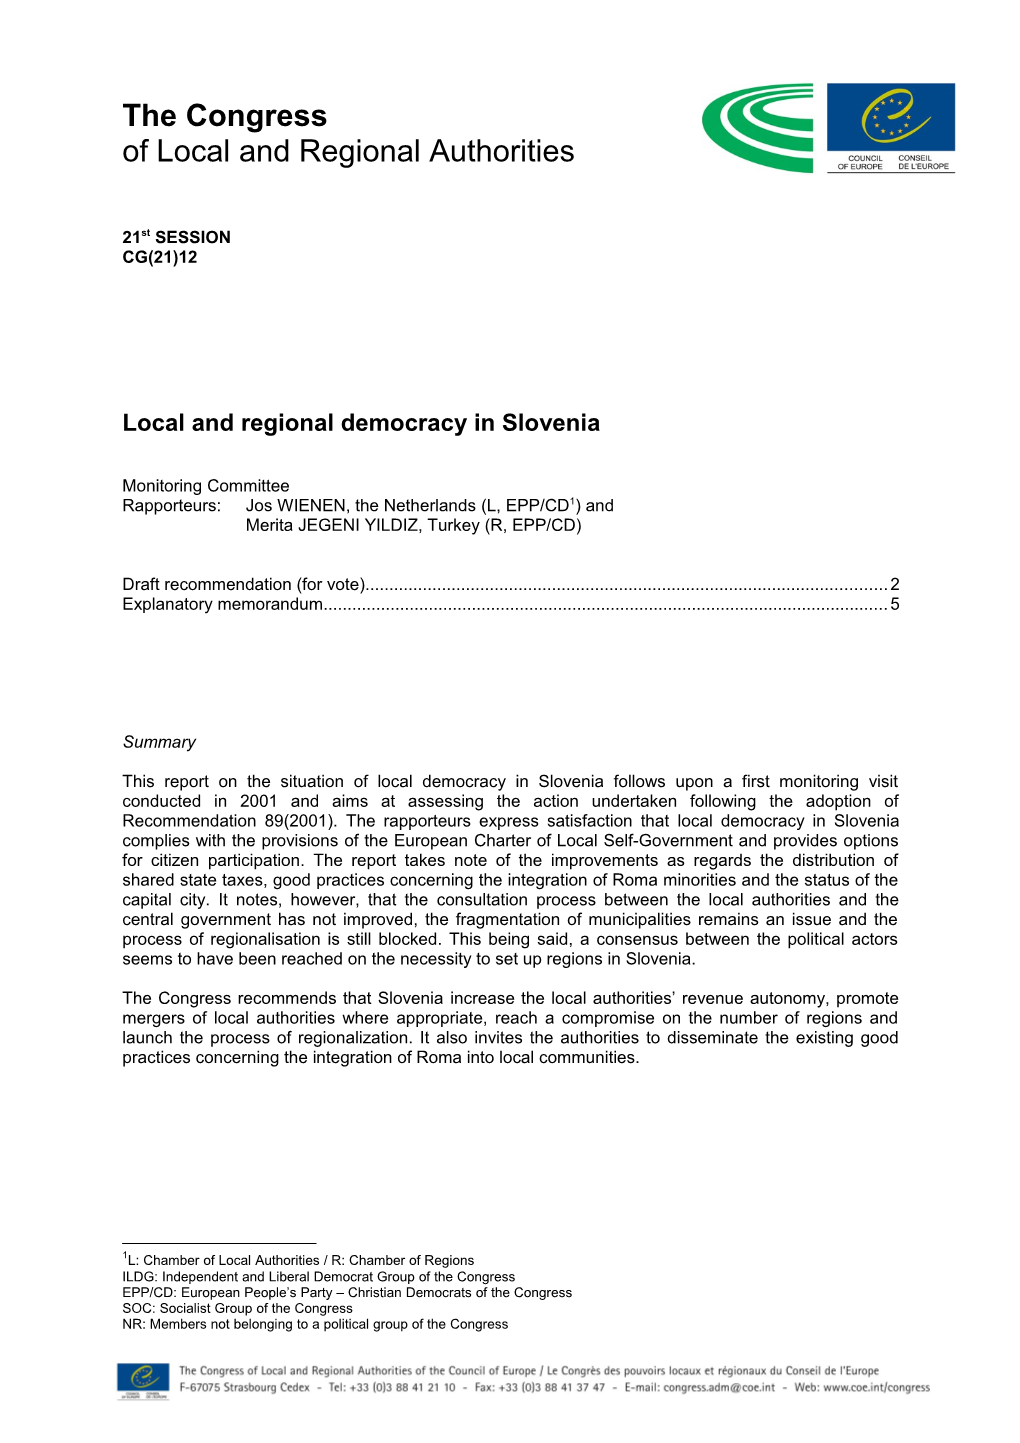 Local and Regional Democracy in Slovenia